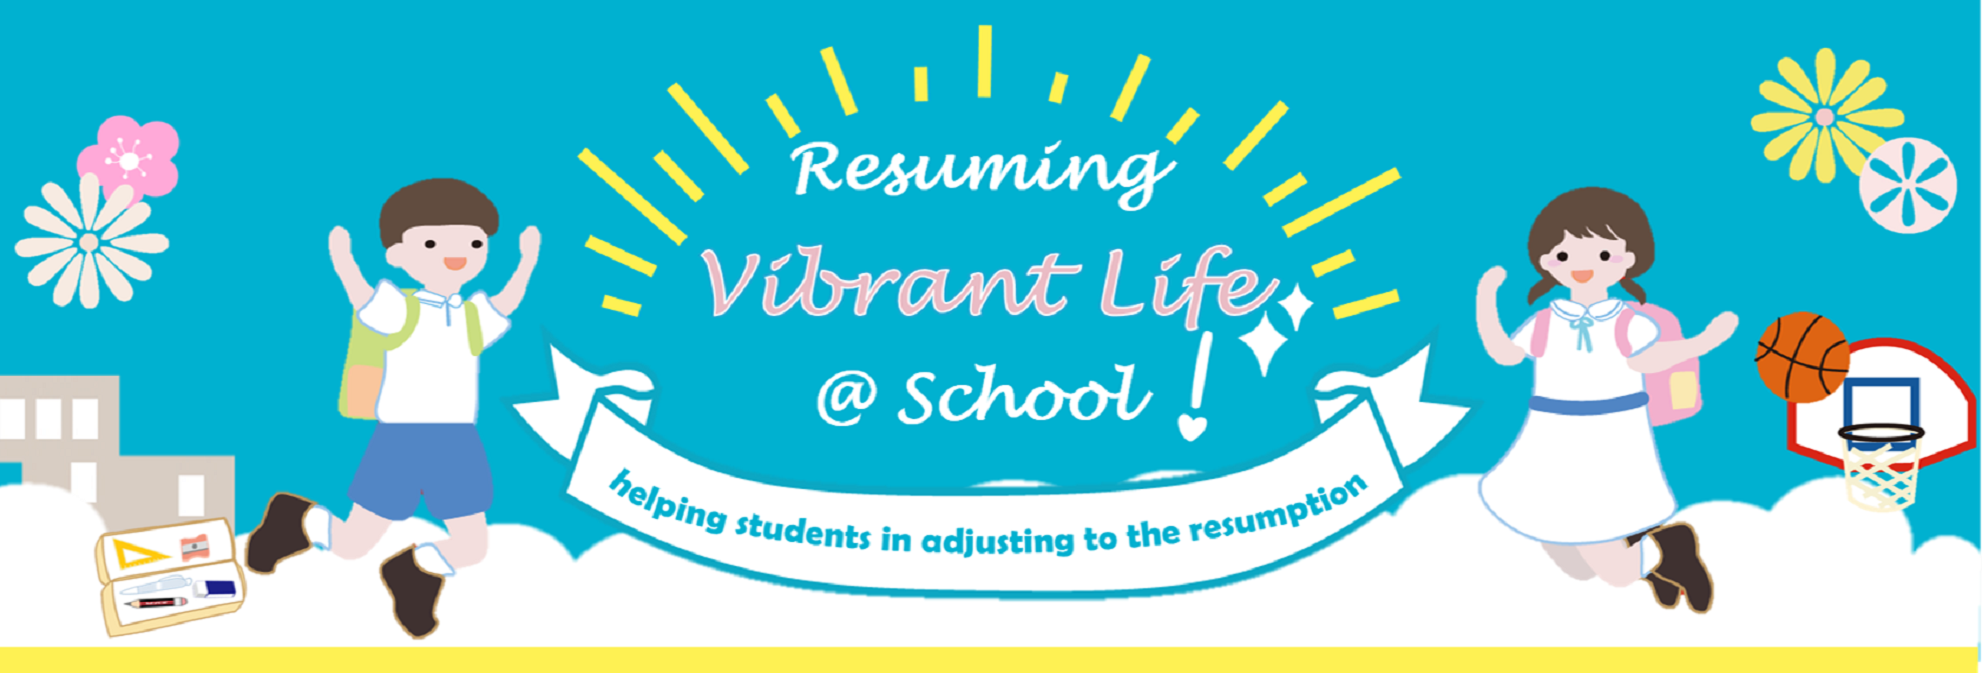 Resuming Vibrant Life @School